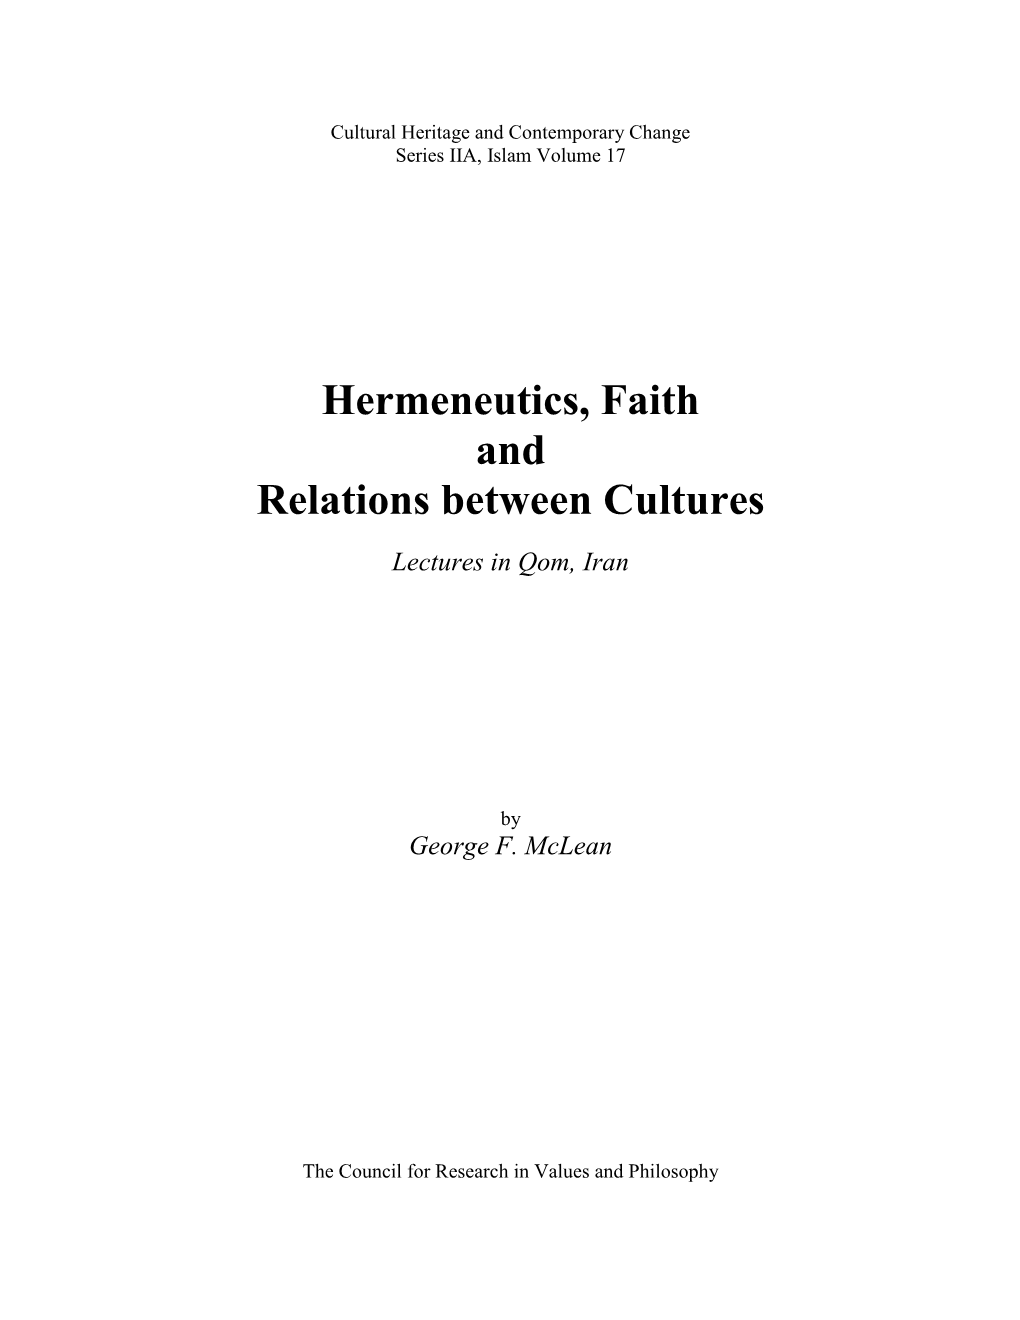 Hermeneutics, Faith and Relations Between Cultures